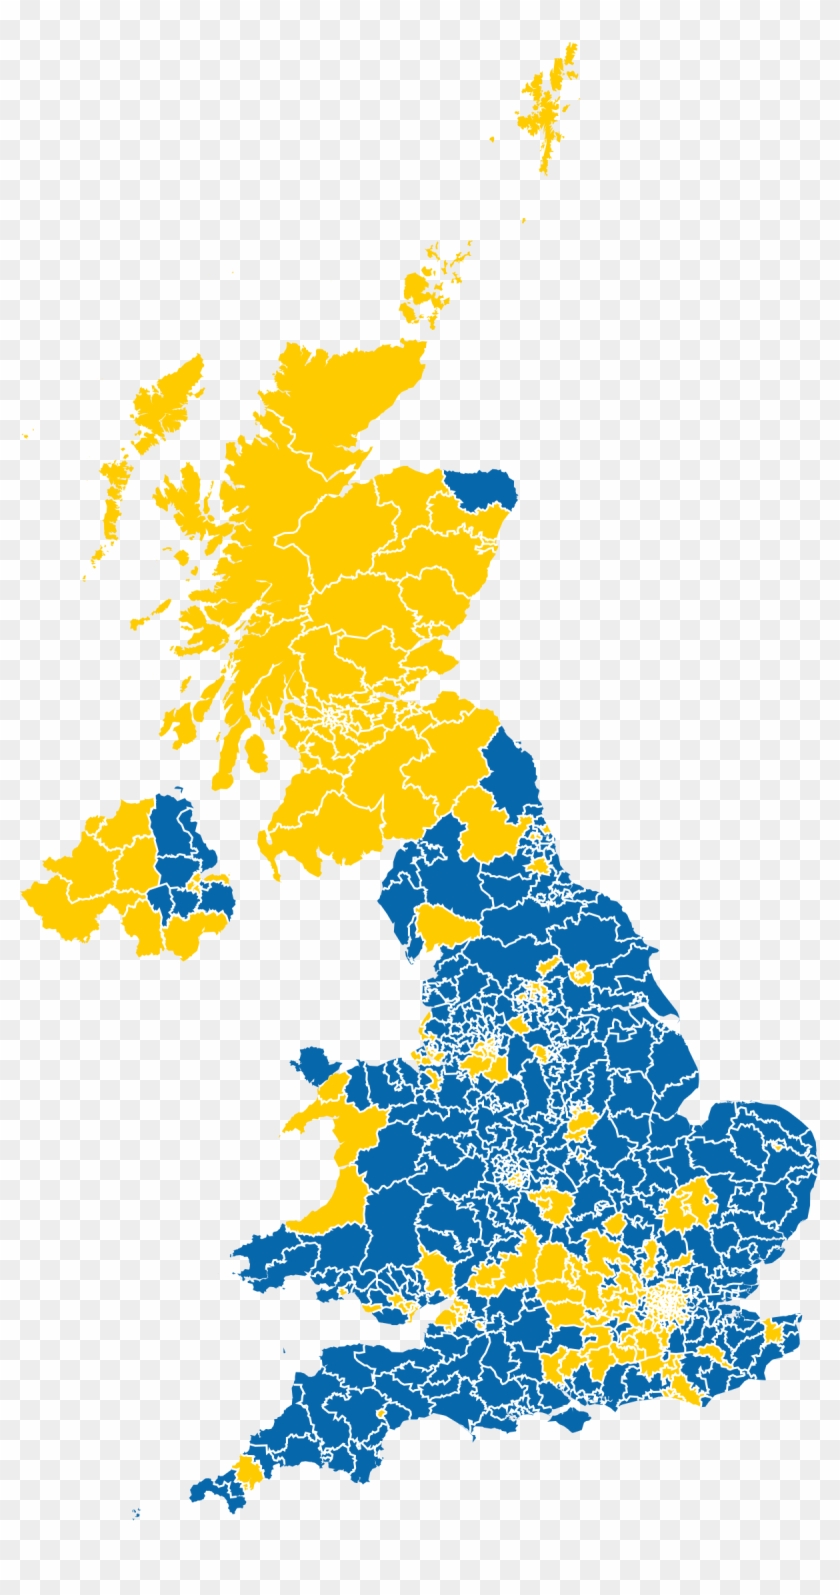 Results Of The 2016 United Kingdom European Union Membership - Uk Eu Referendum Results Map Clipart #3990975